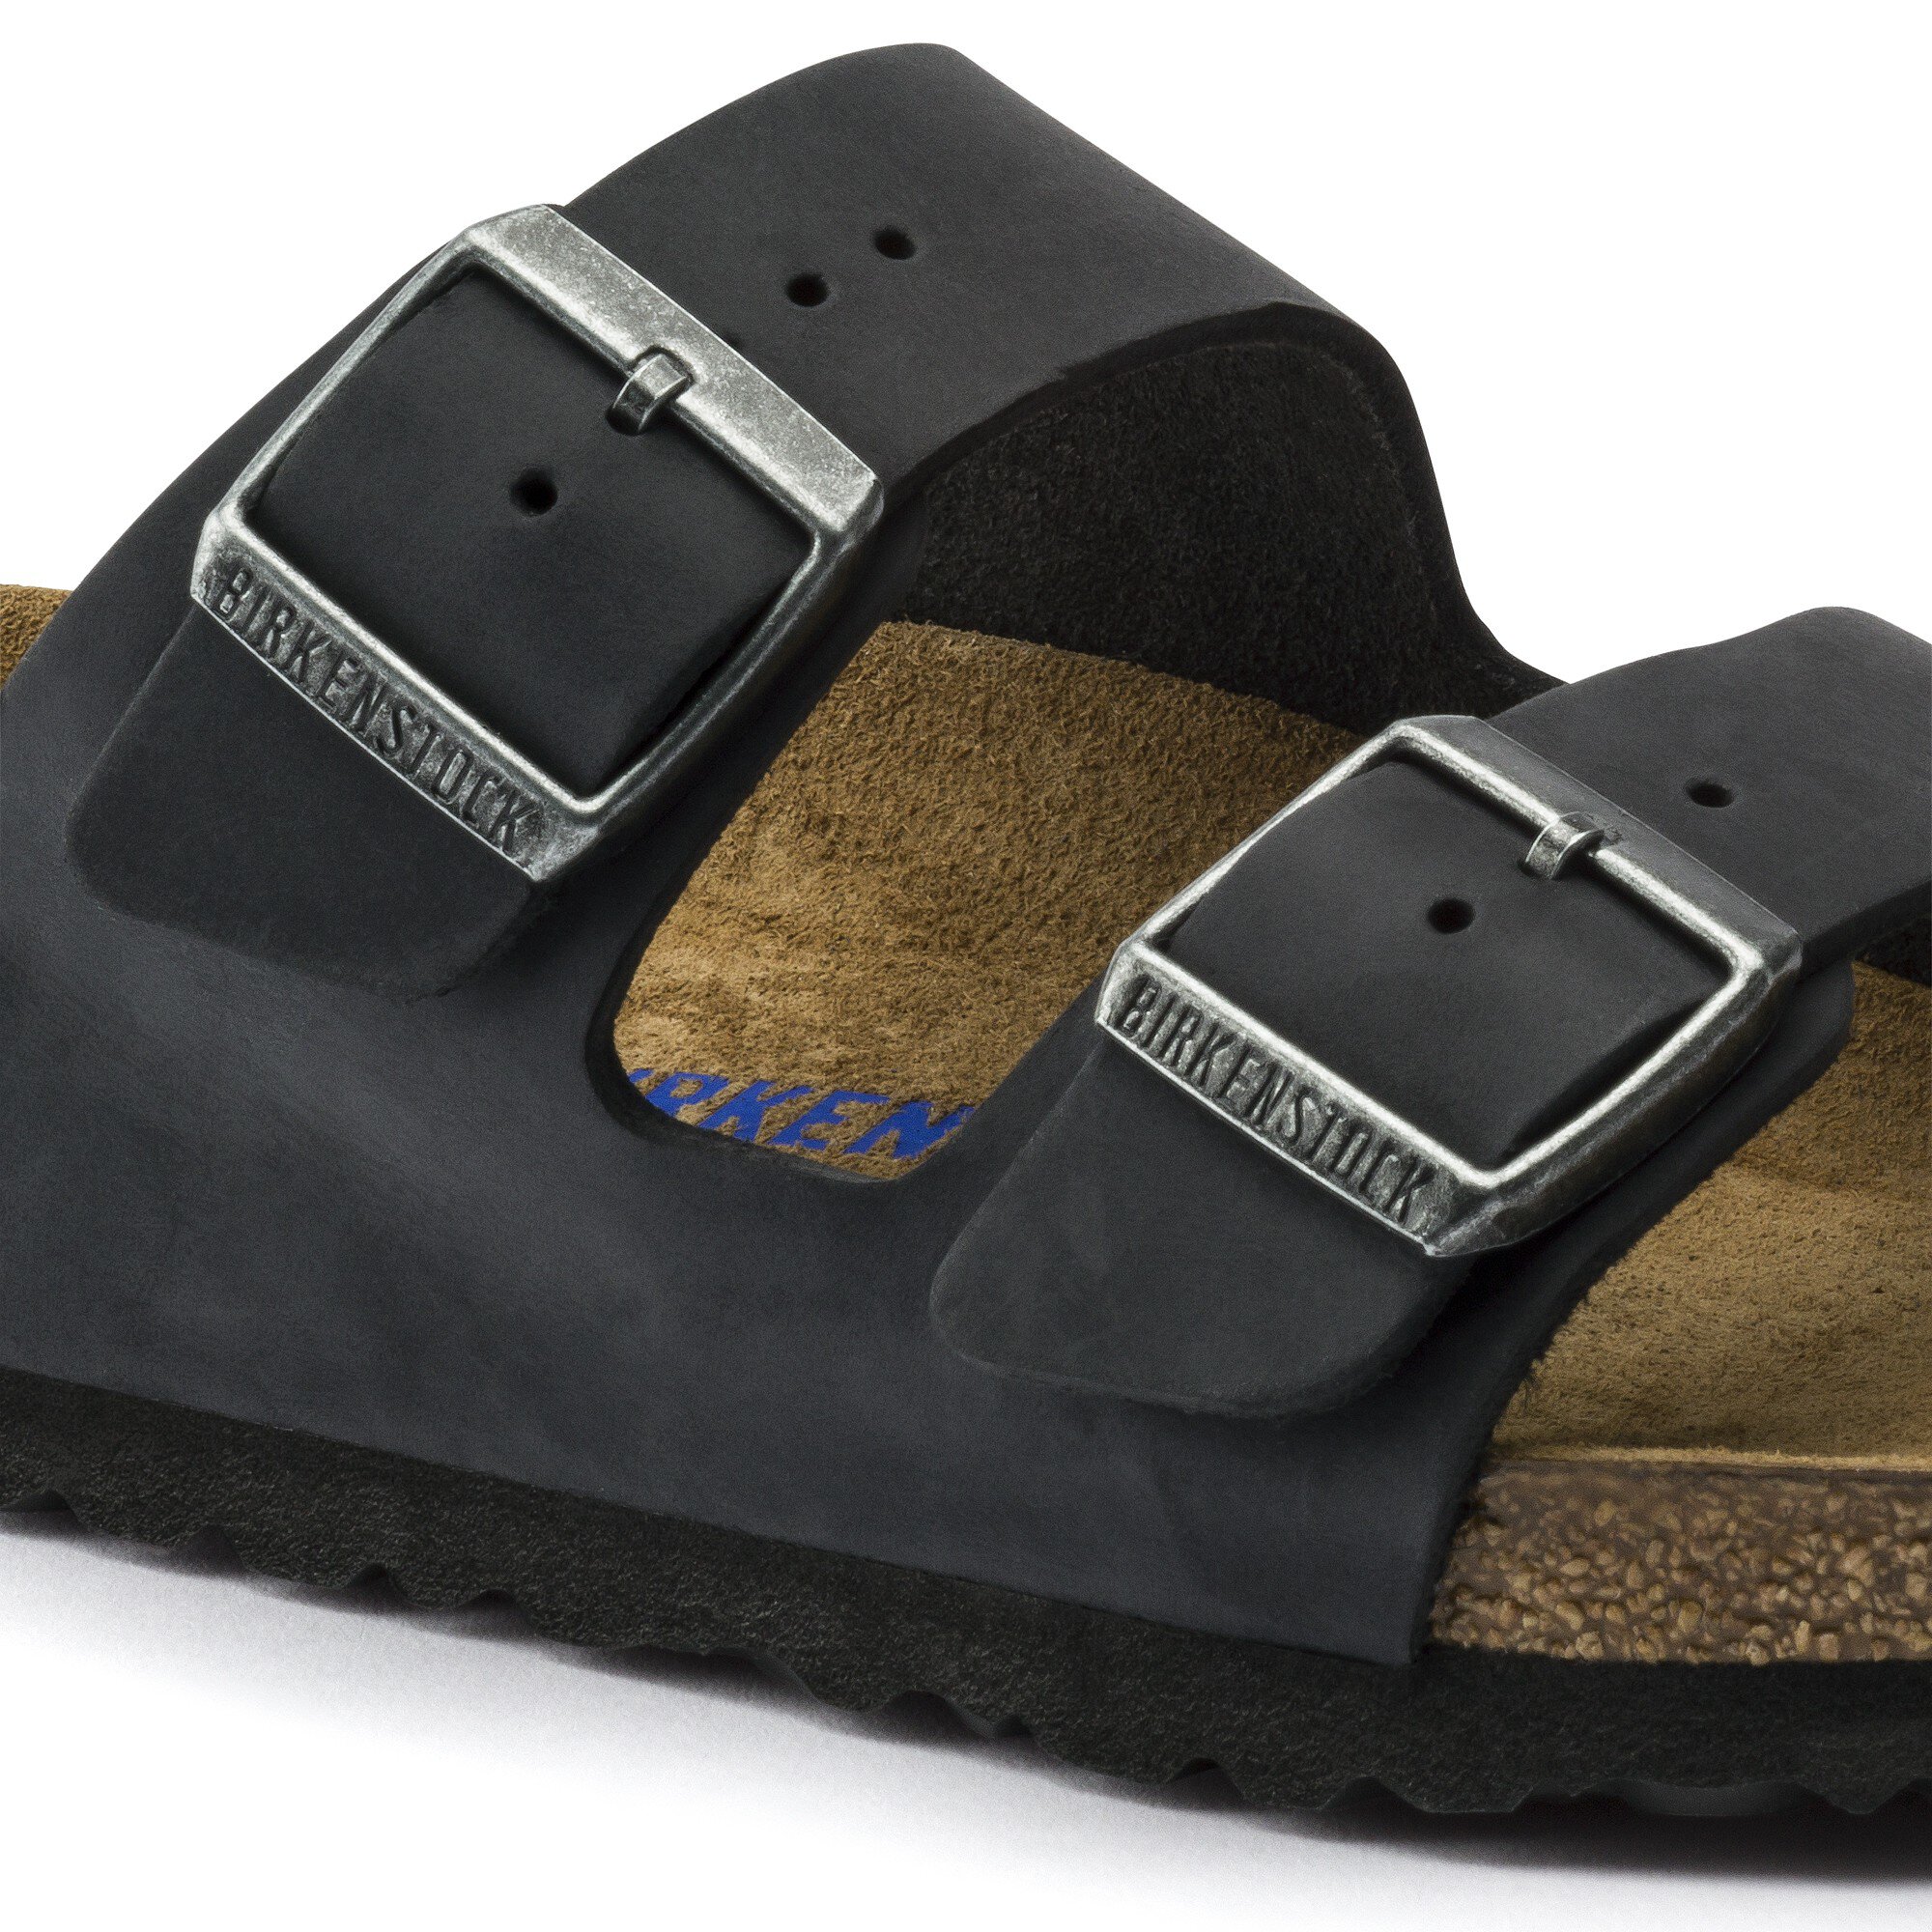 birkenstock arizona oiled leather sandals